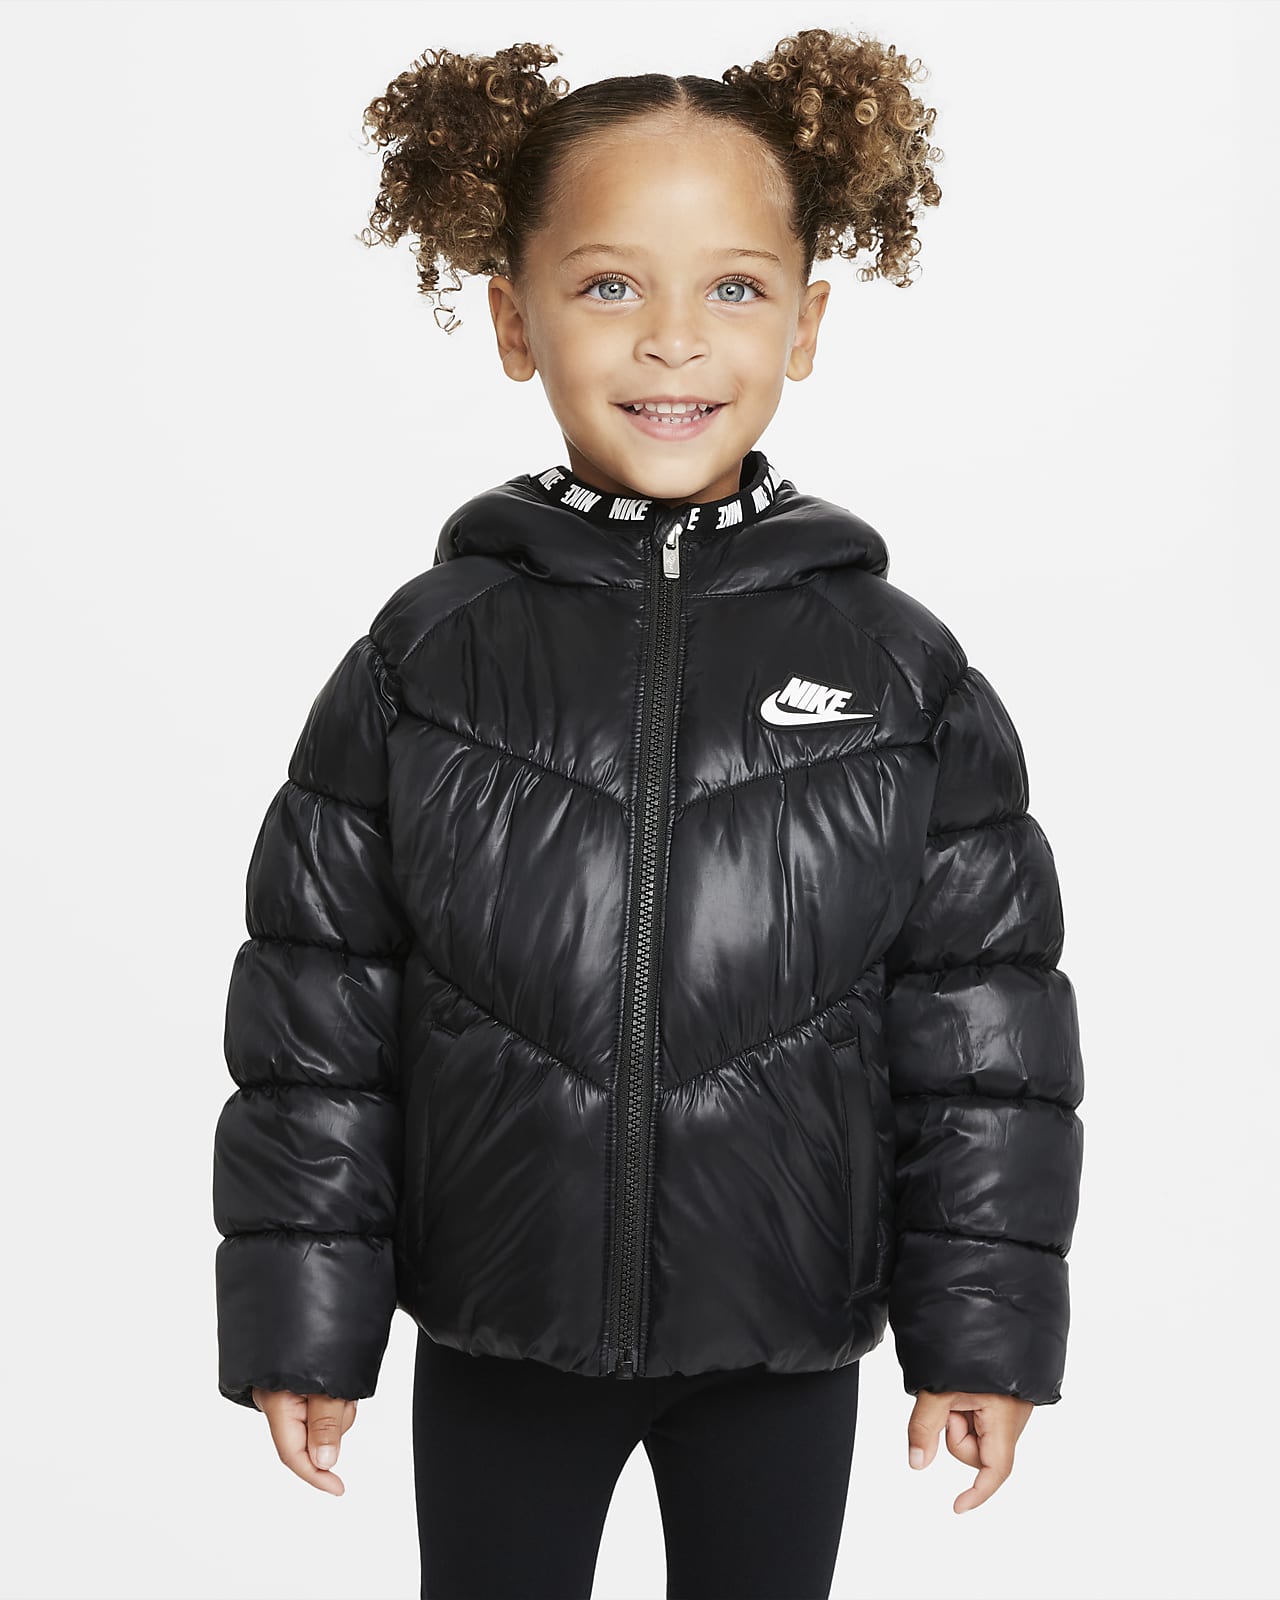 Toddler Black Puffer Jacket | tyello.com